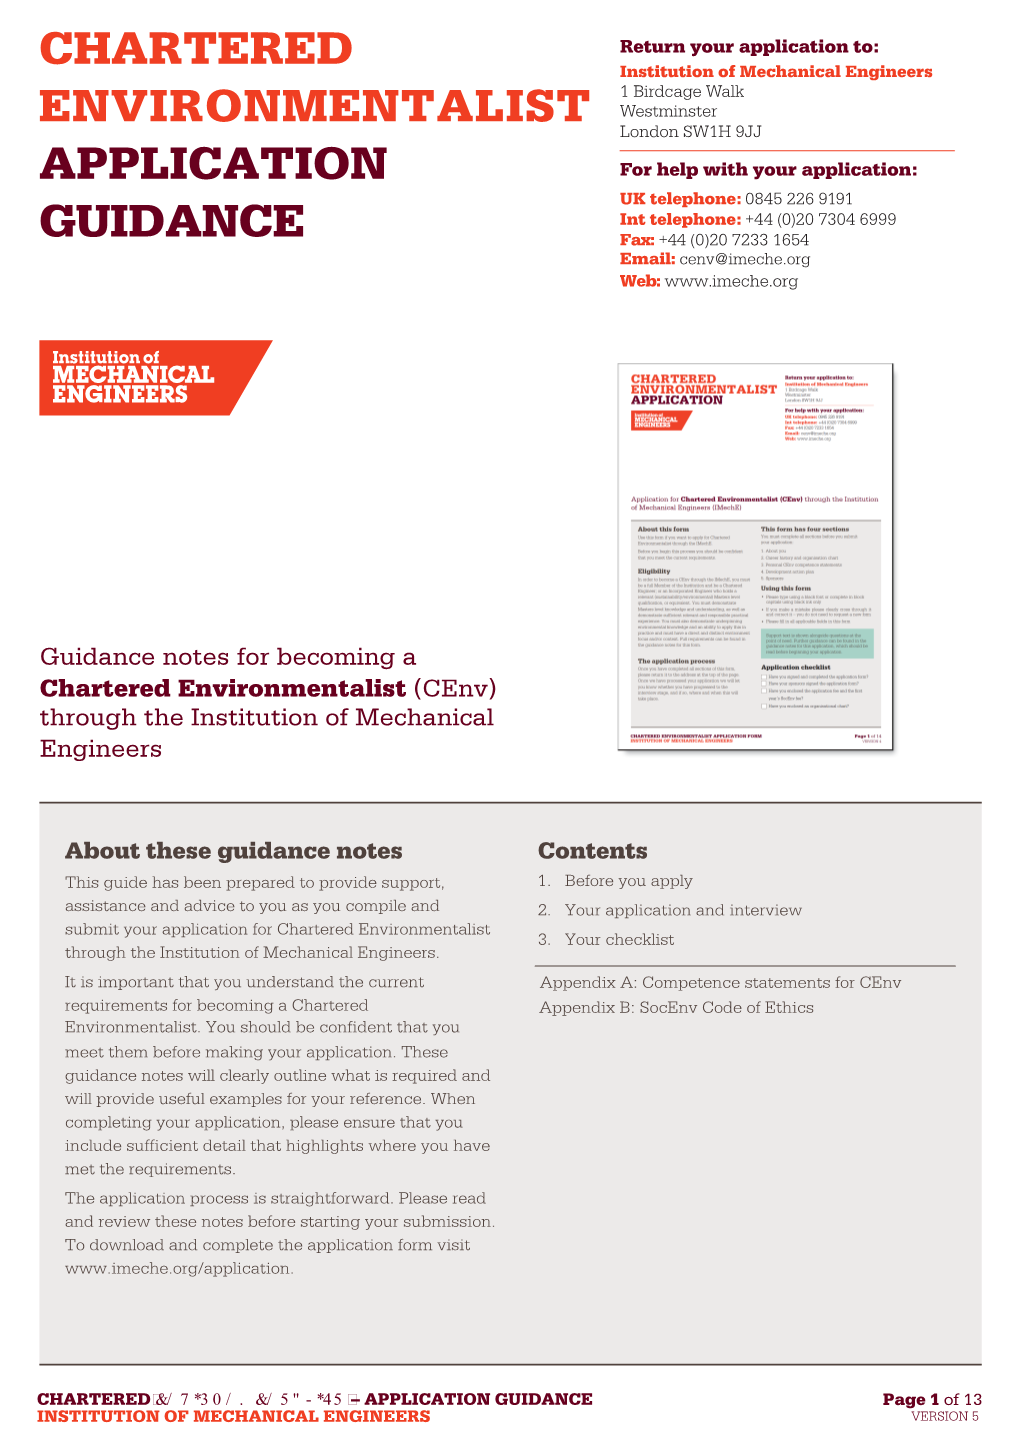 Chartered Environmentalist Application Guidance